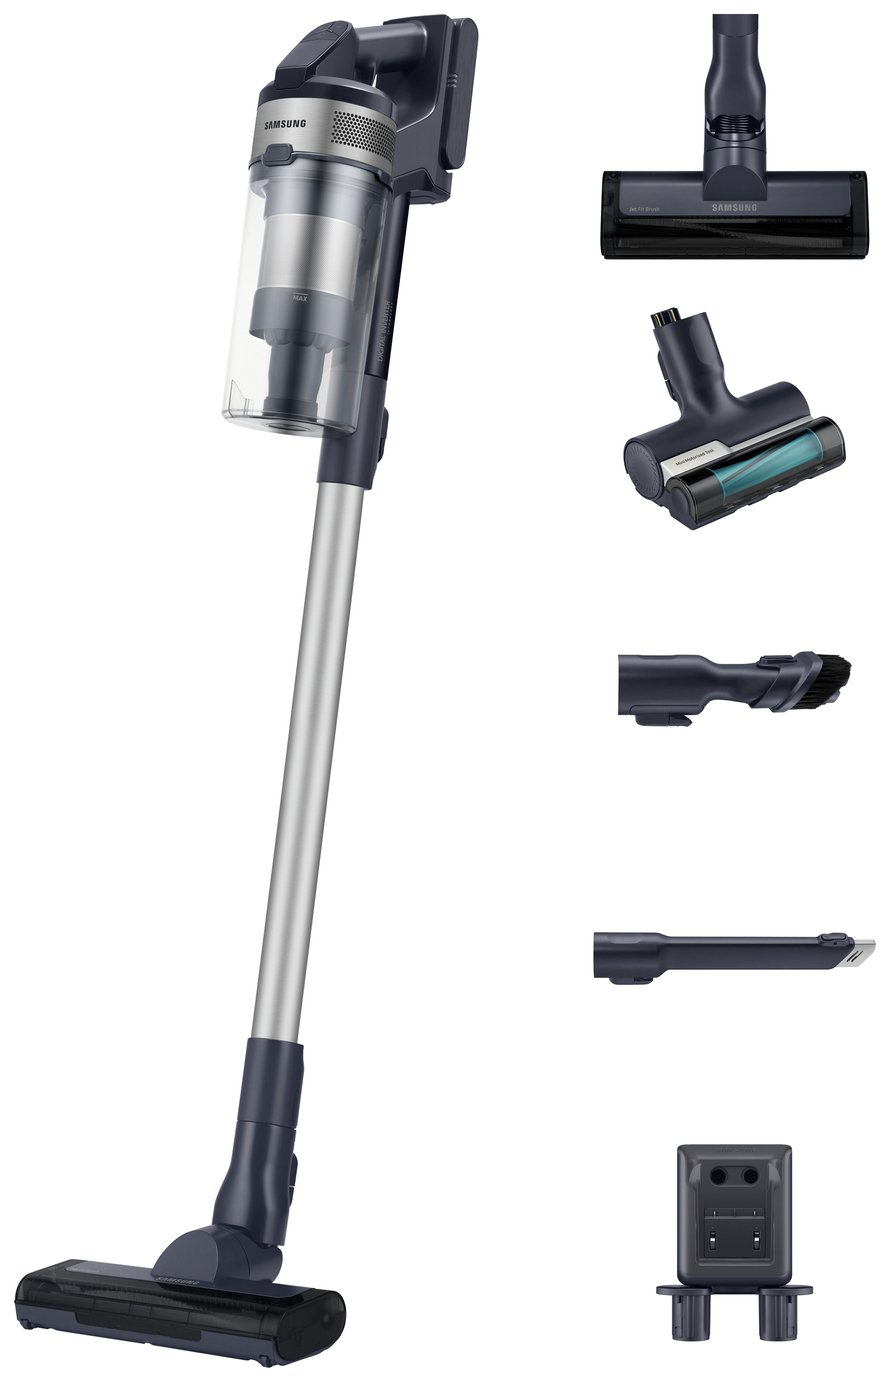 Samsung Jet 60 Pet Cordless Vacuum Cleaner